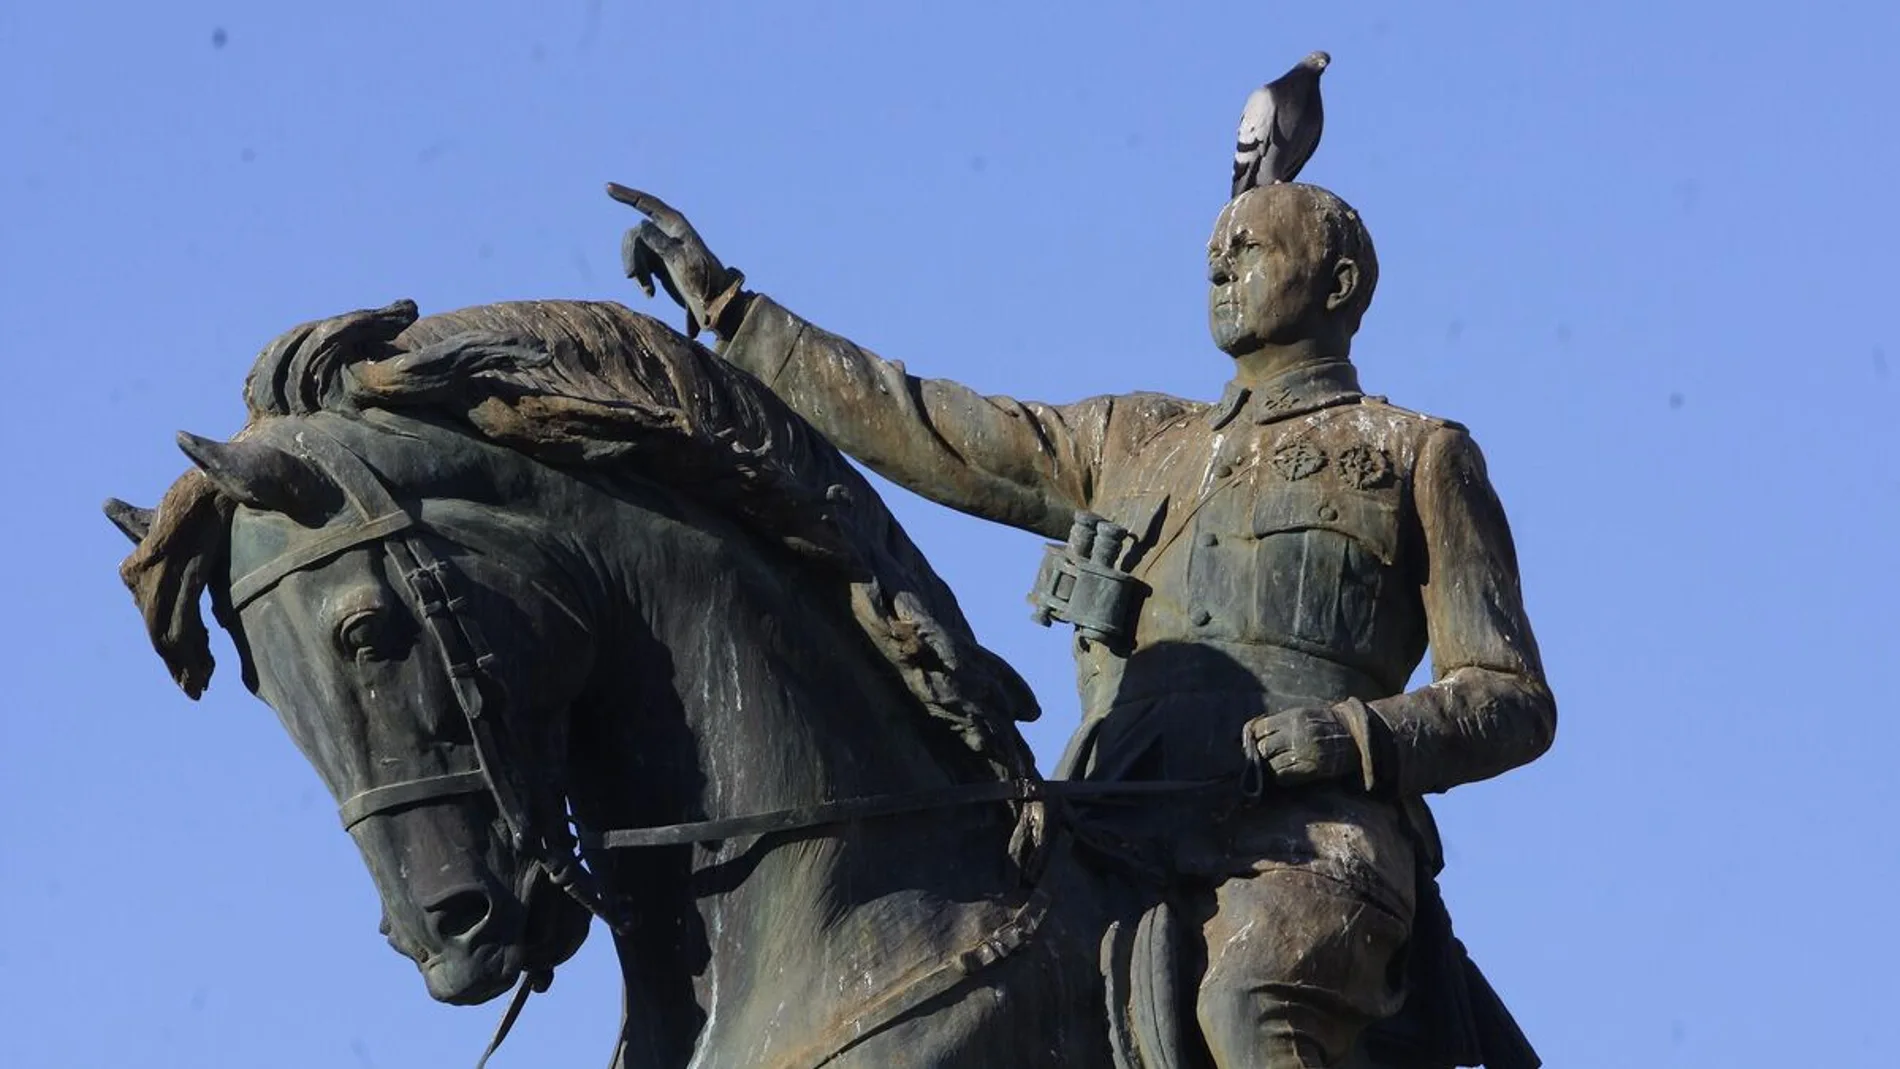 La estatua del general Varela que quieren retirar del centro de San Fernando, Cádiz